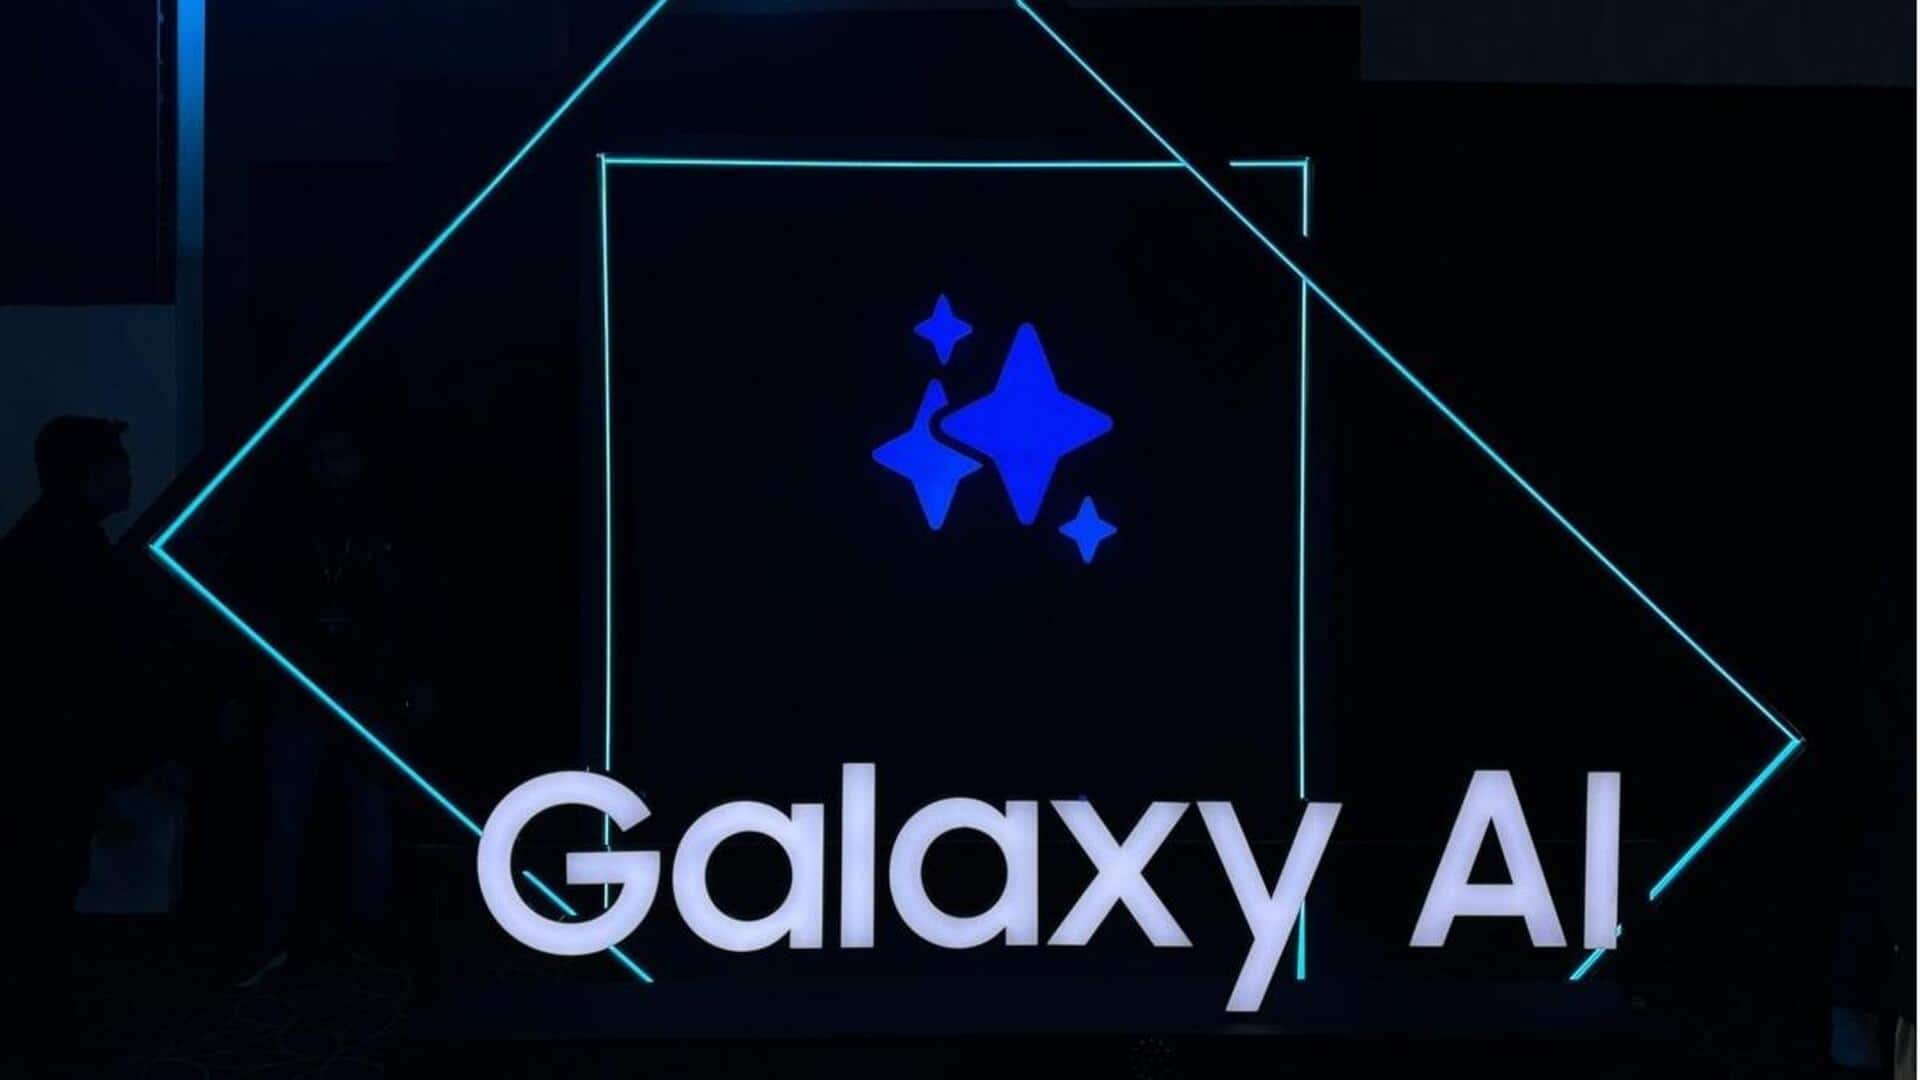 Samsung's Galaxy AI now speaks Hindi like a native